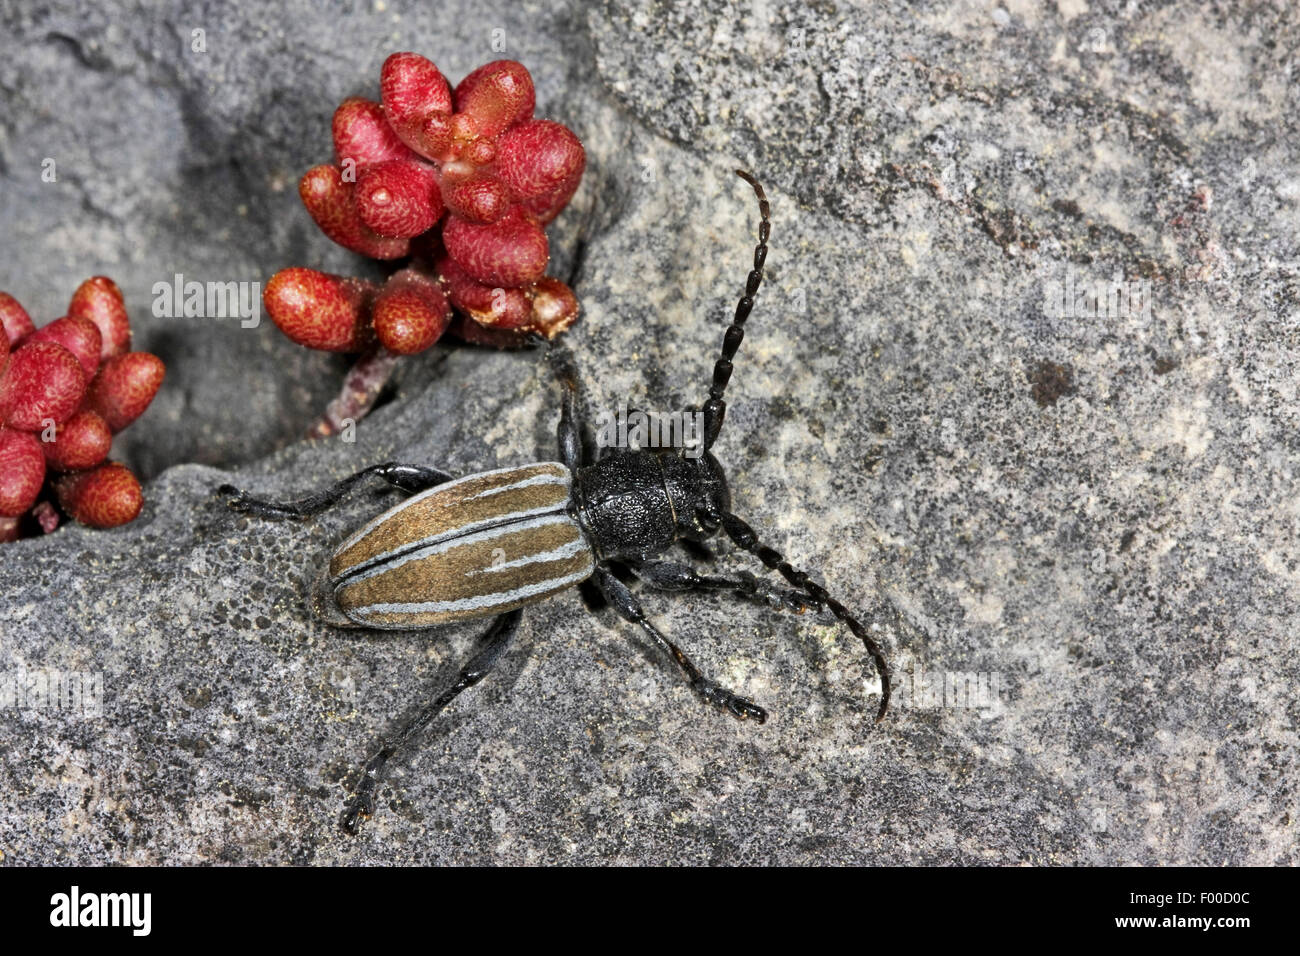 Grass-feeding beetle, Flightless Longhorn Beetle (Dorcadion fuliginator, Iberodorcadion fuliginator), on a stone, Germany Stock Photo